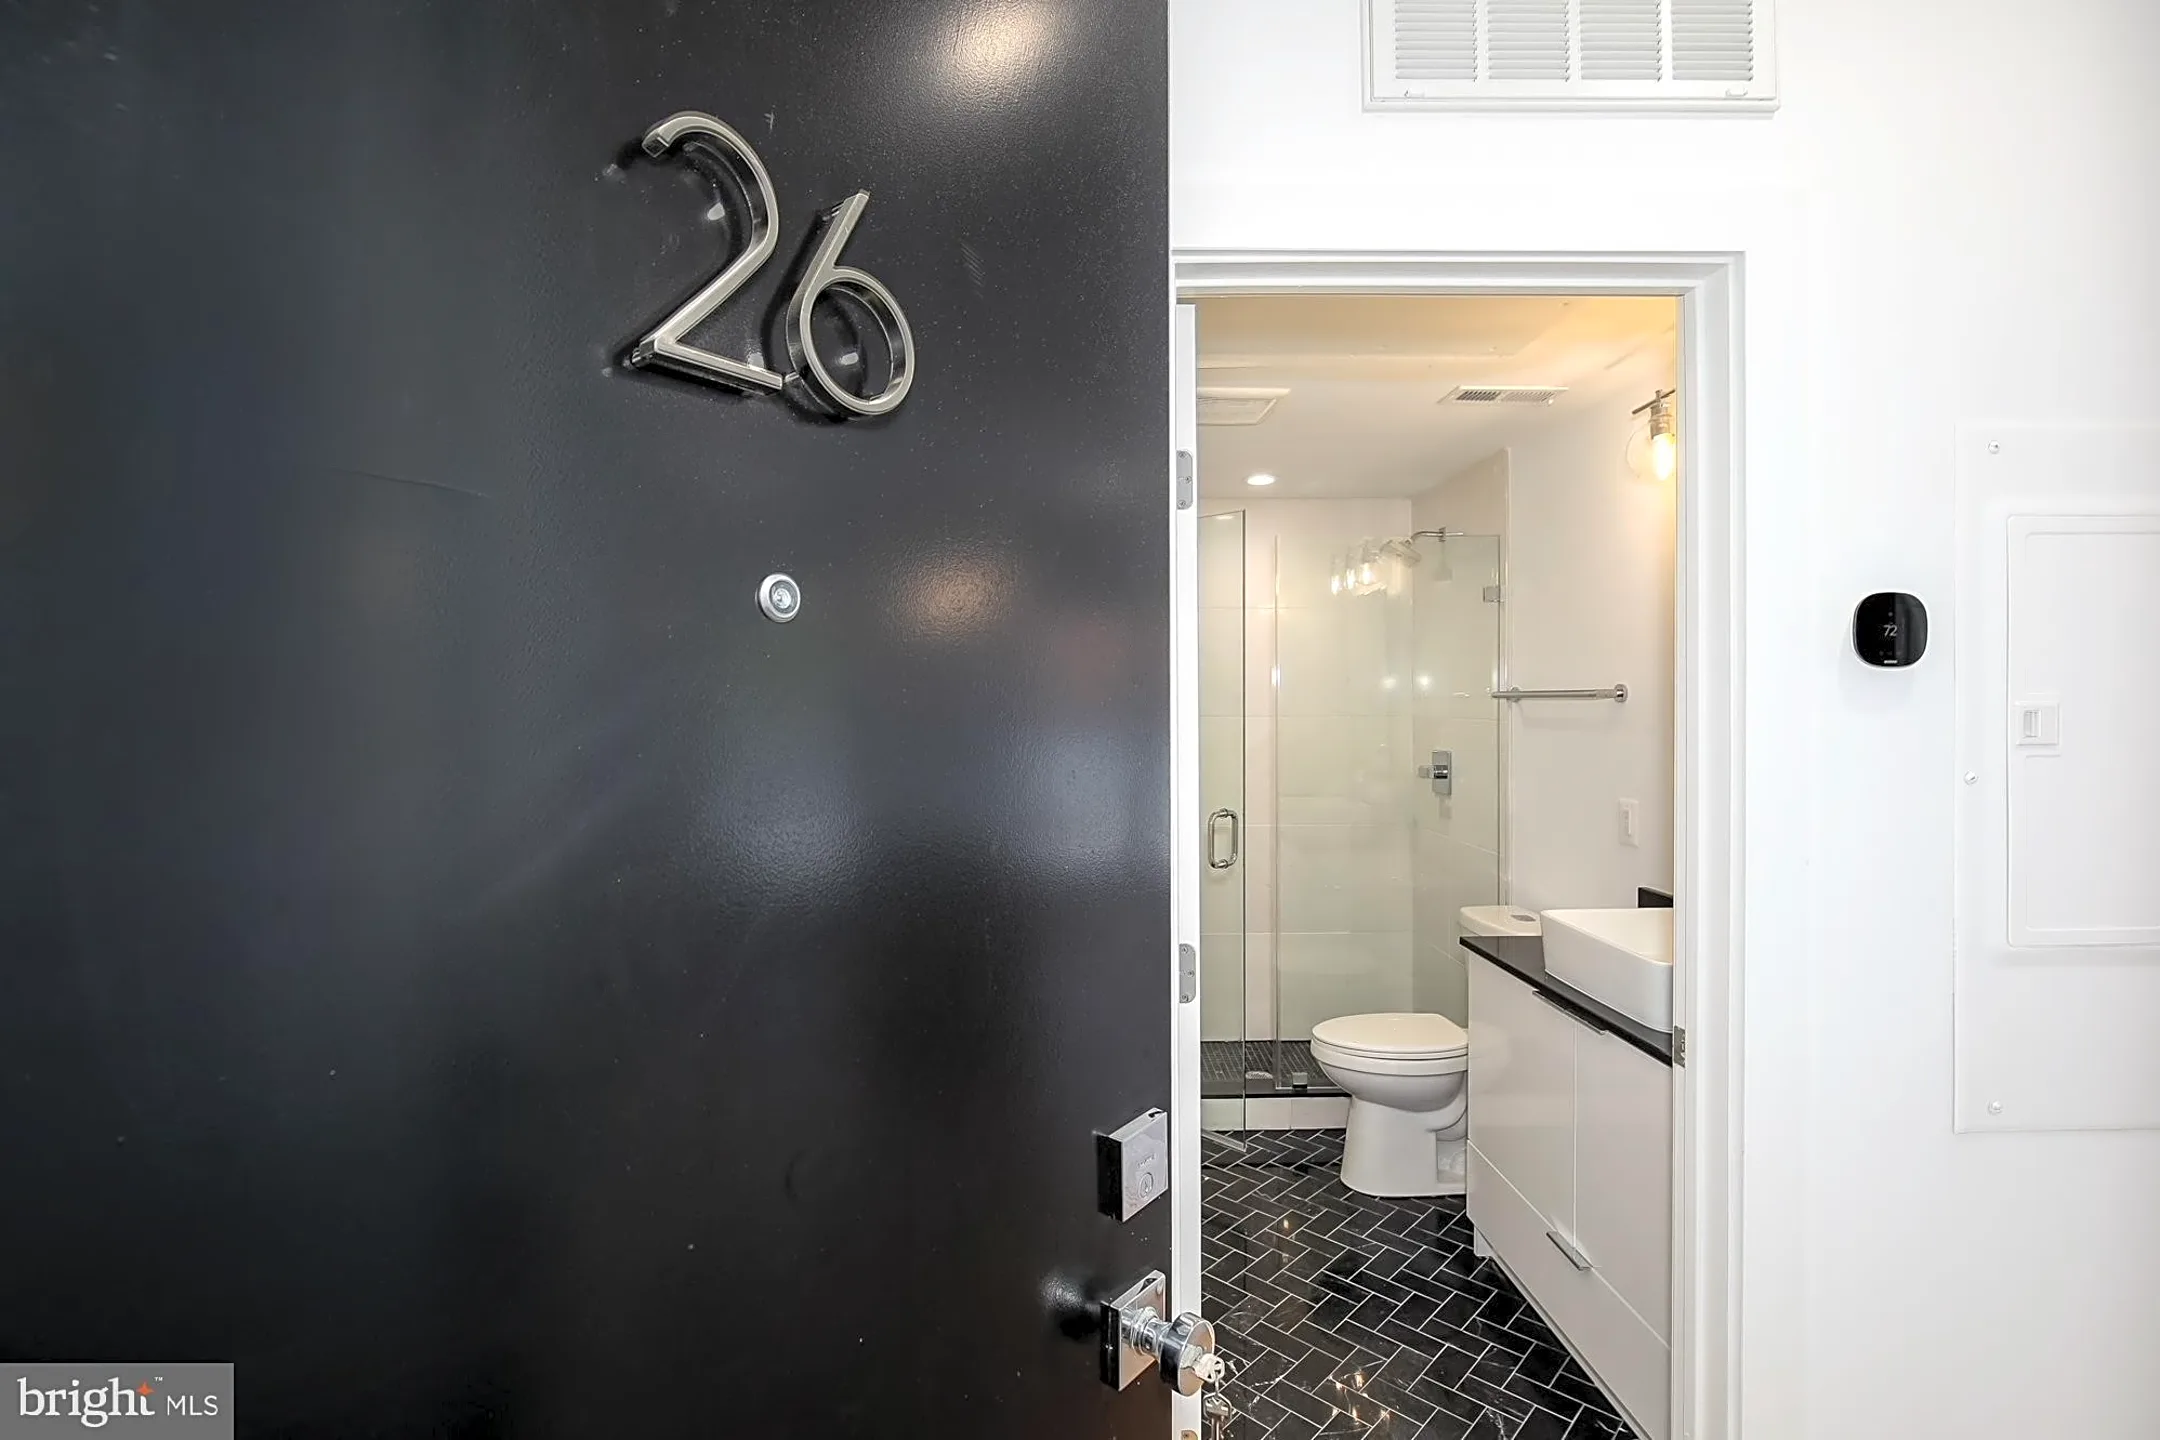 Bathroom - 3743 12th St NE #26 - Washington, DC